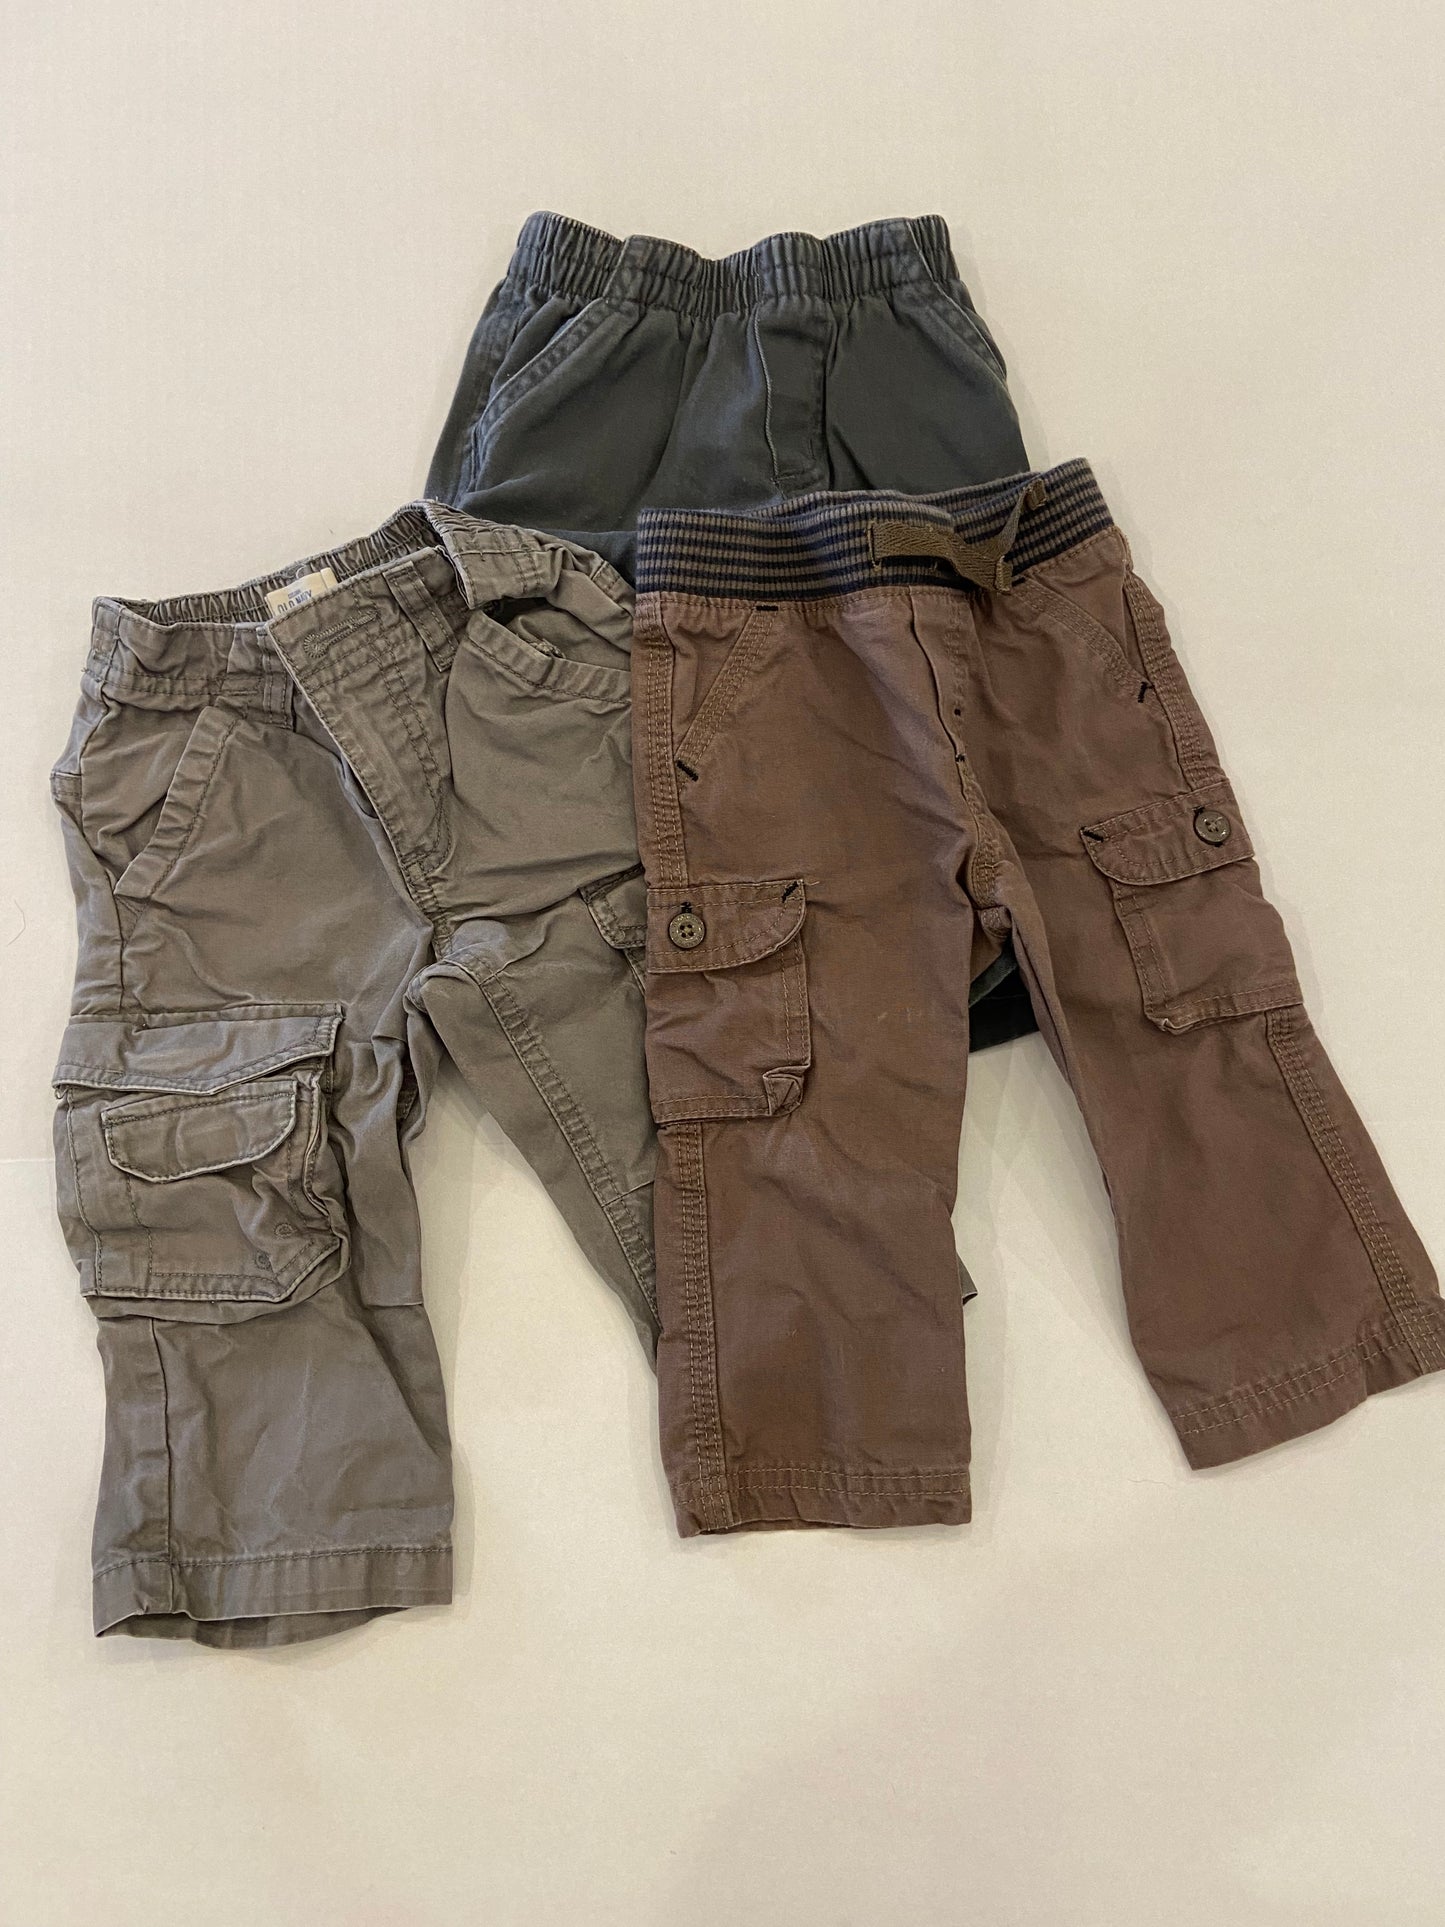 Boys 12-18 mos Mixed pant bundle, including 2 cargo pants